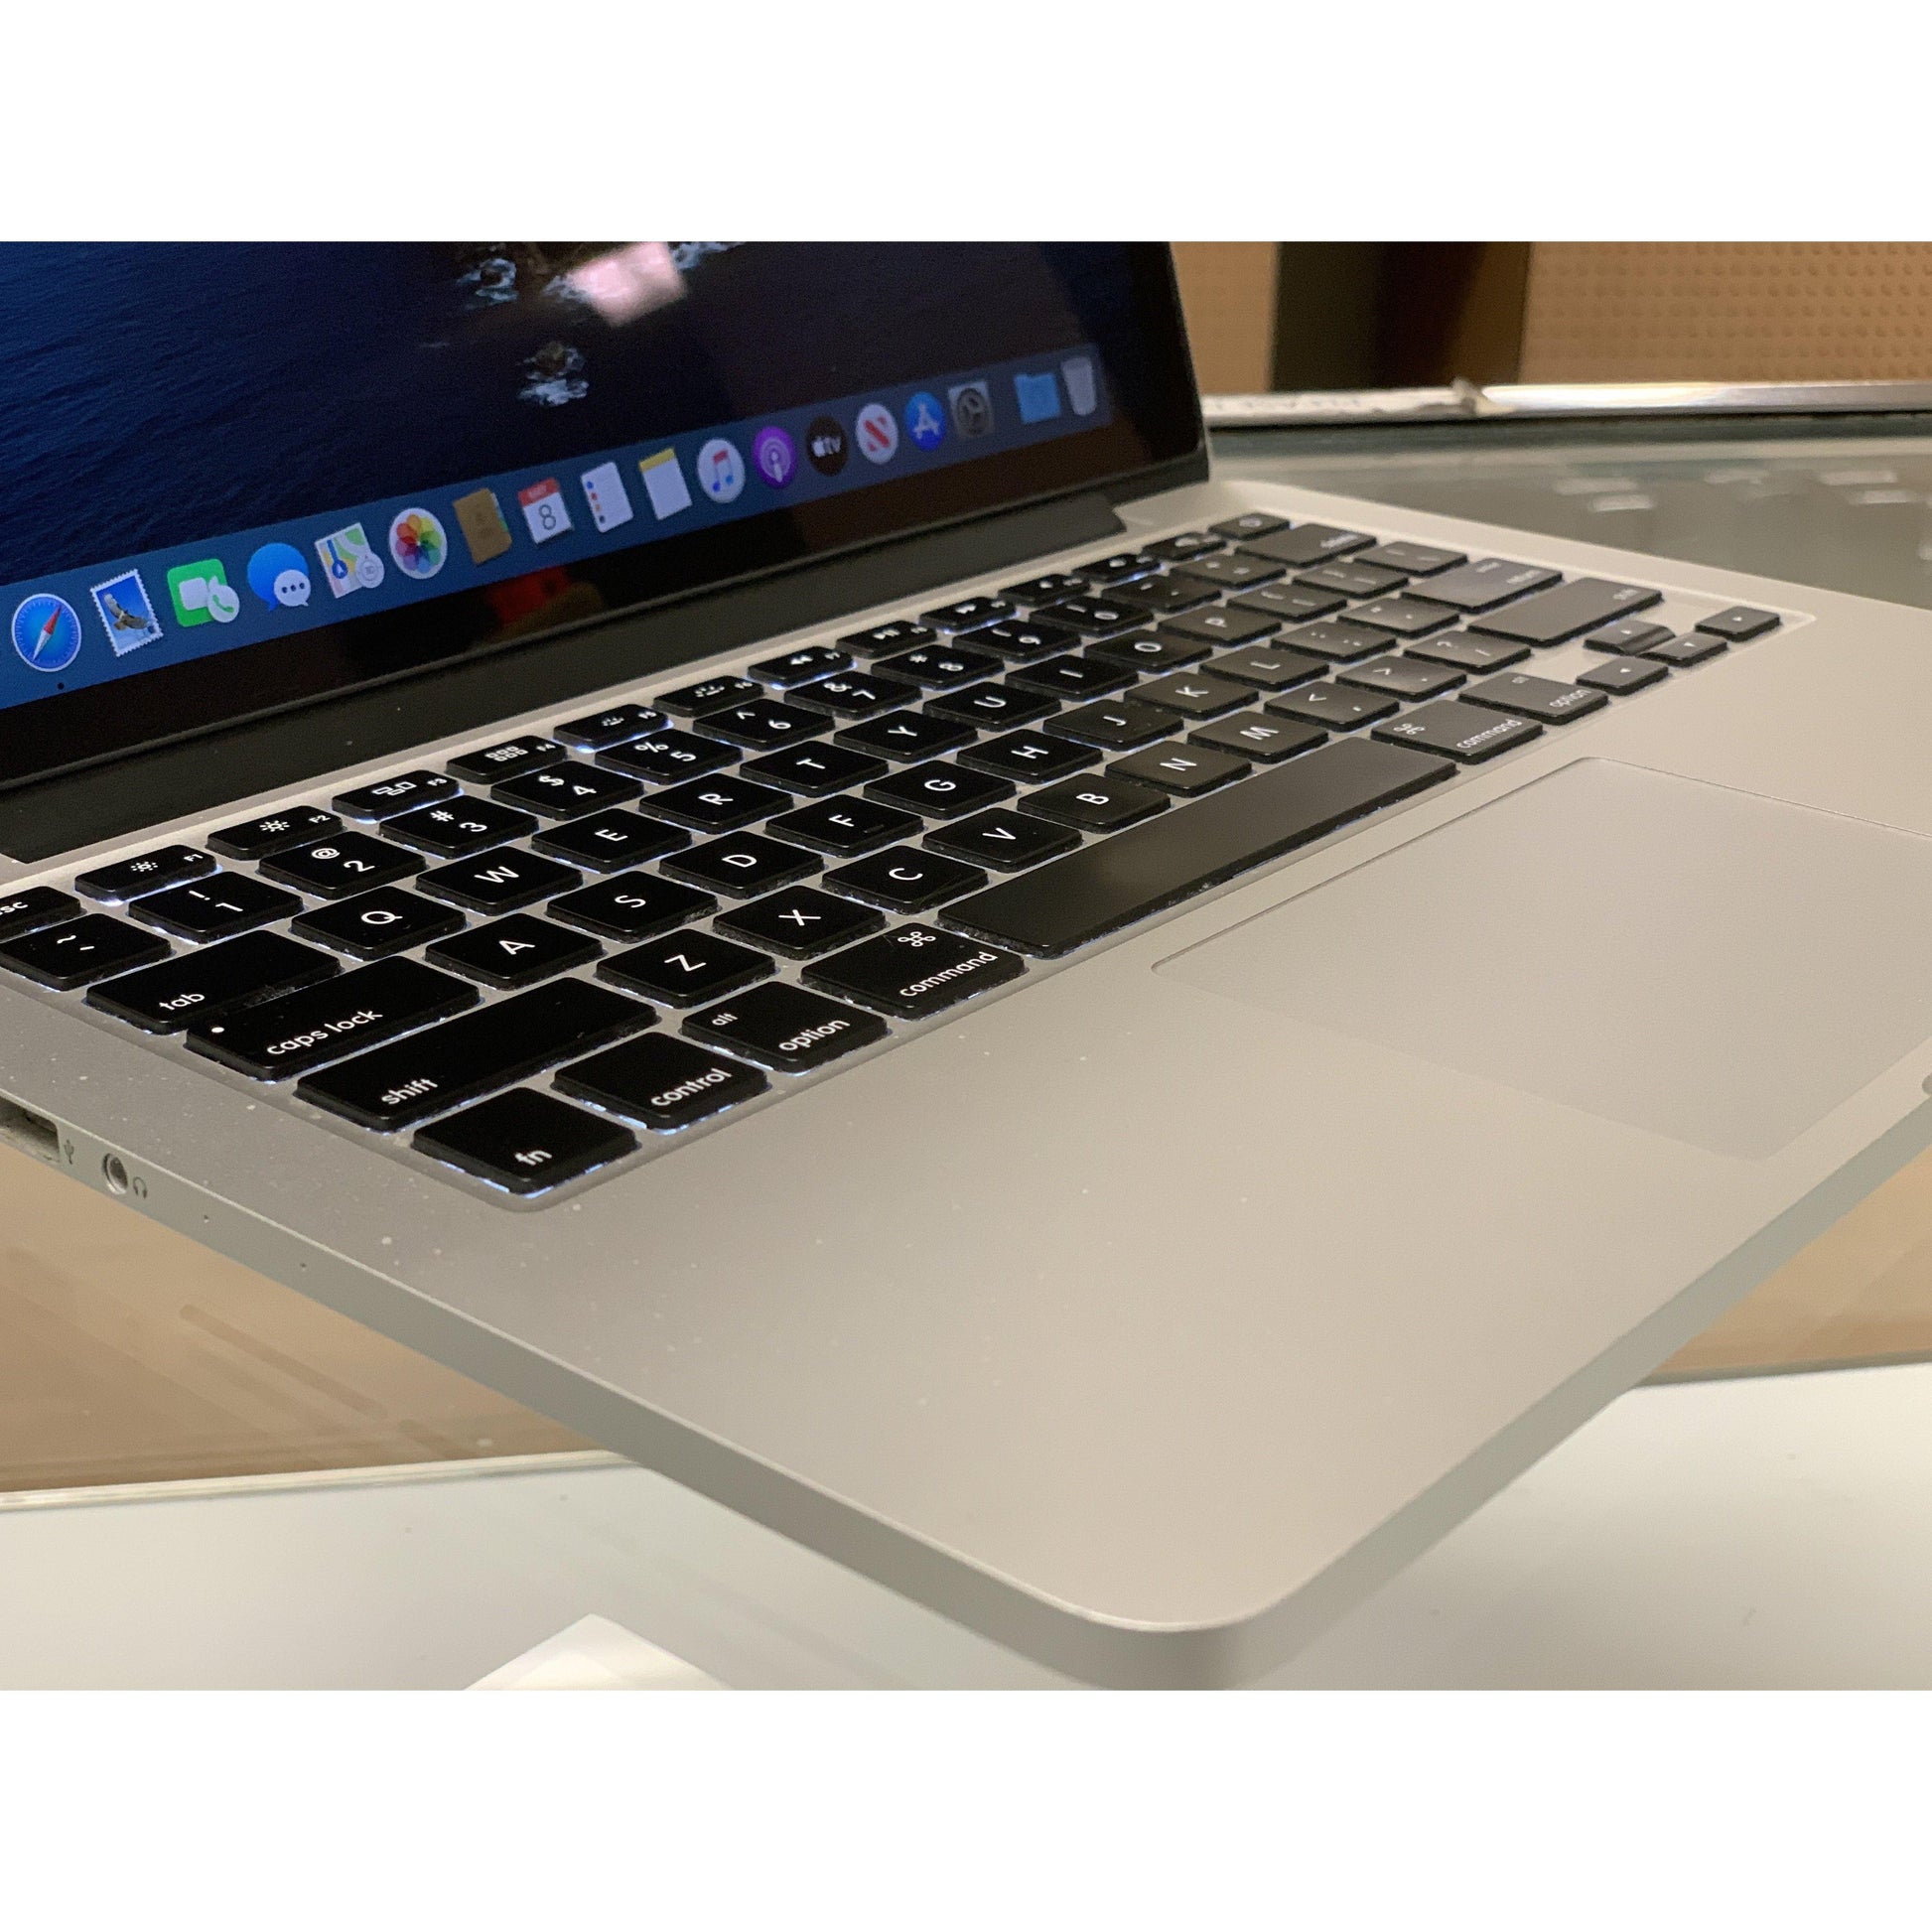 MacBook Pro (Retina, 13-inch, Mid 2014) - PCMaster Pro 